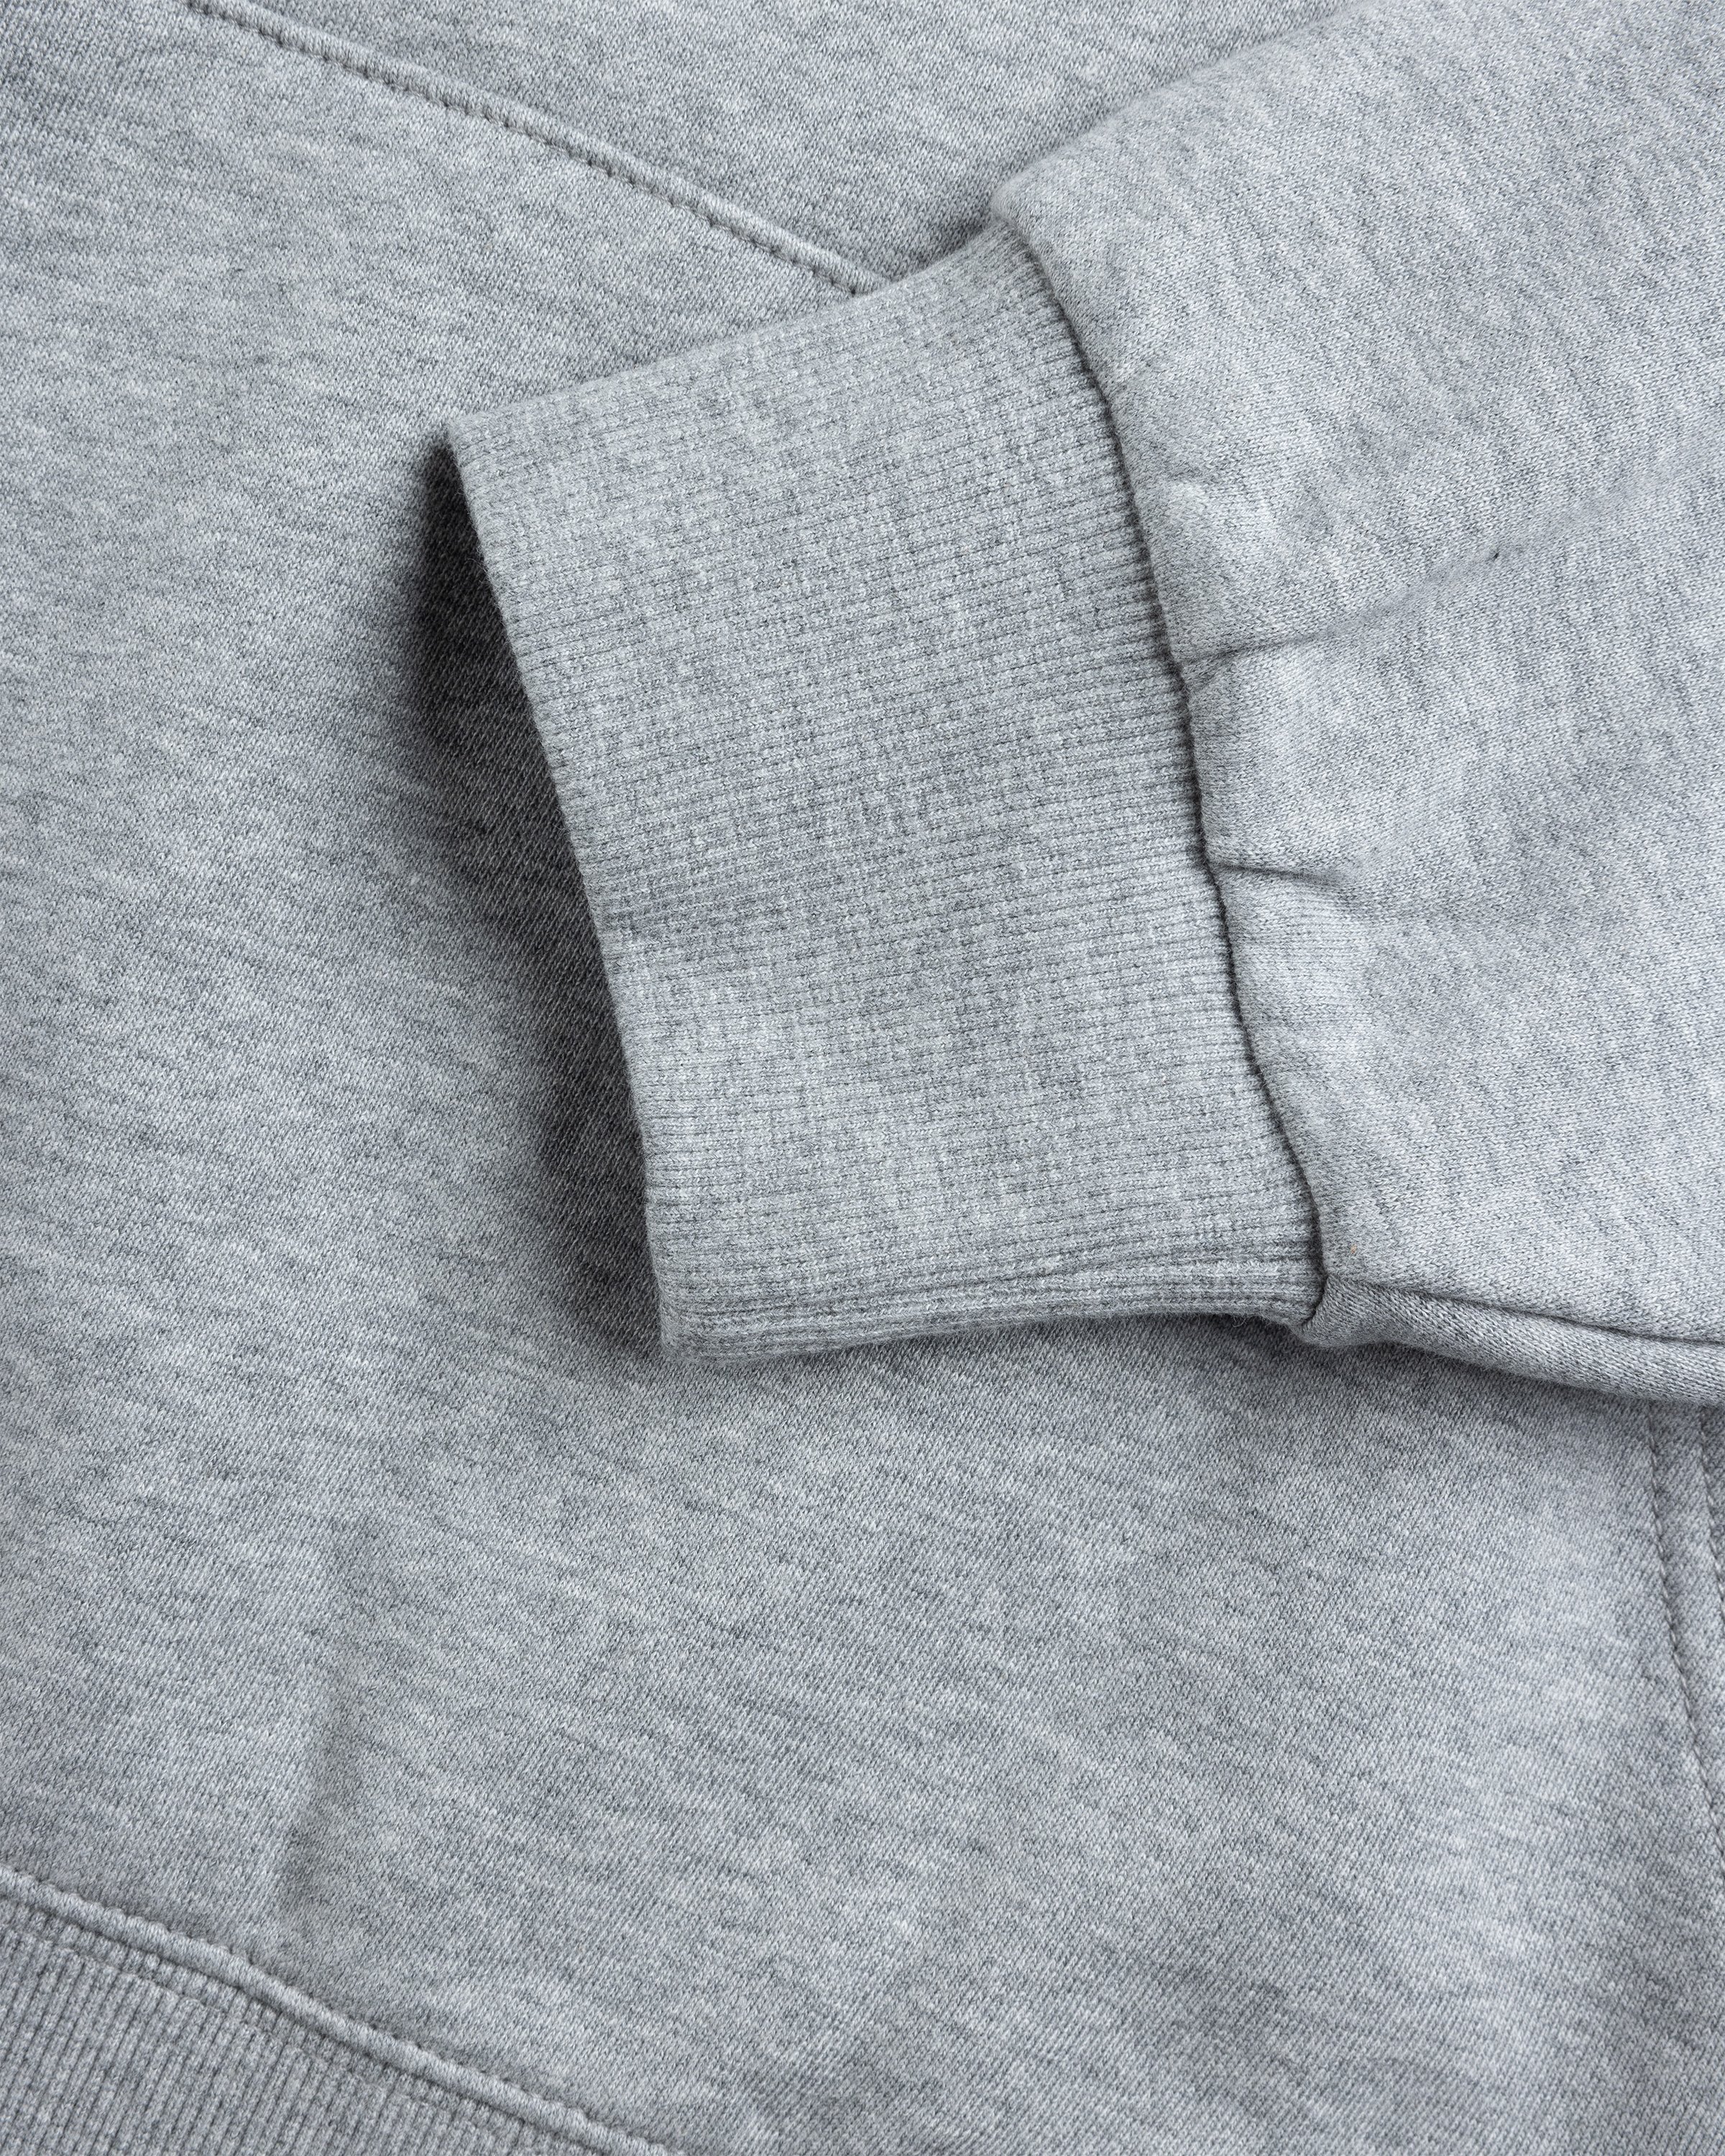 Carhartt WIP - Hooded Heart Sweatshirt Grey Heather - Clothing - Grey - Image 6